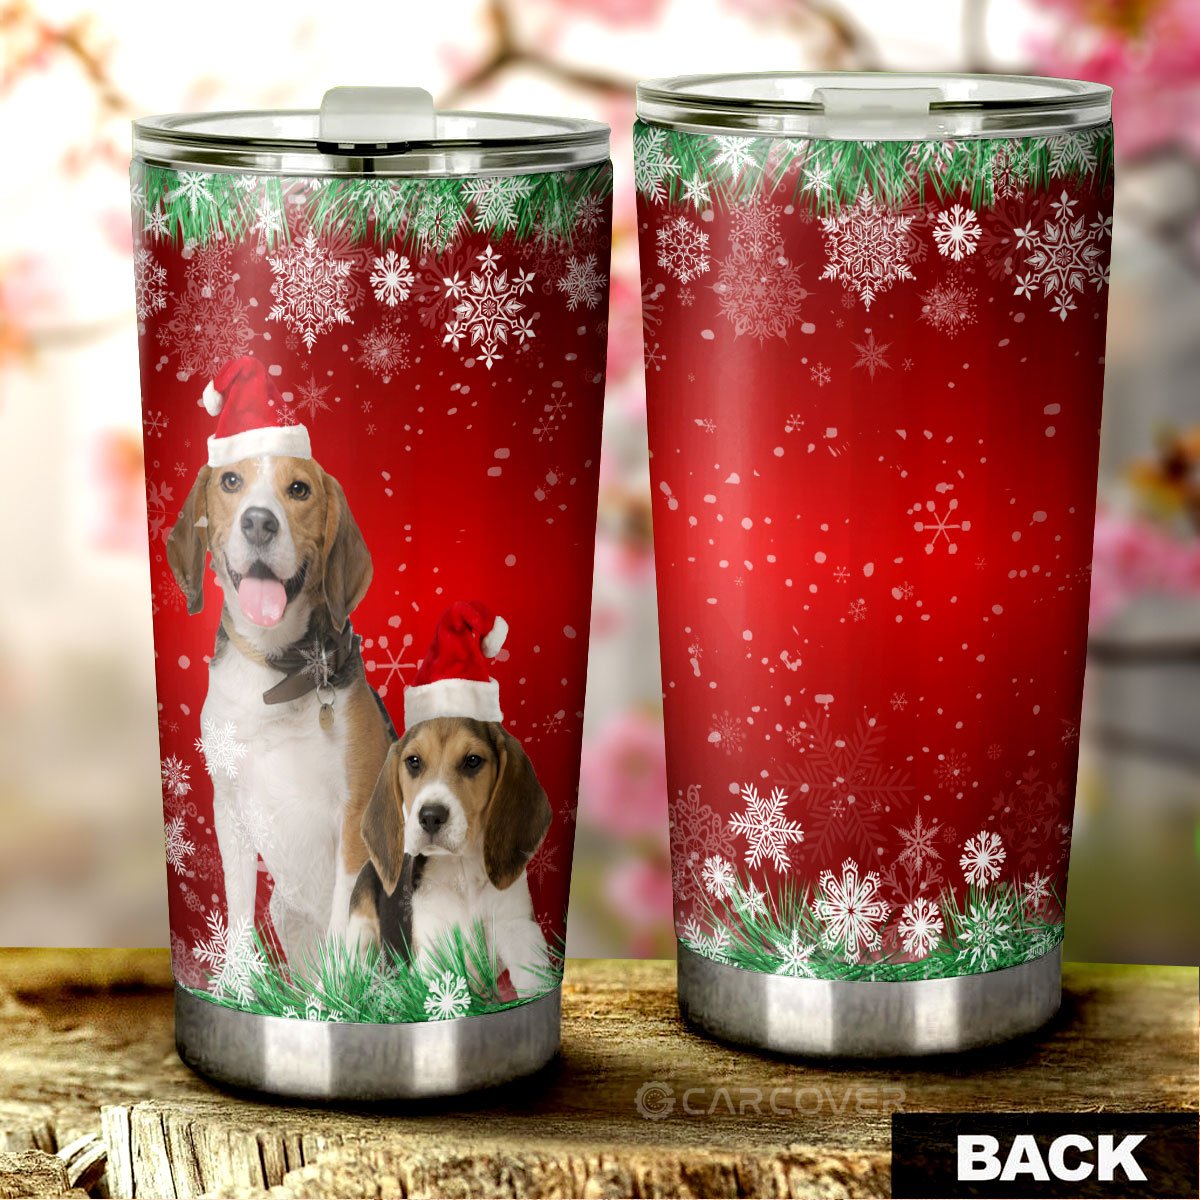 Cute Xmas Beagles Tumbler Cup Custom Car Accessories Christmas Decorations - Gearcarcover - 4